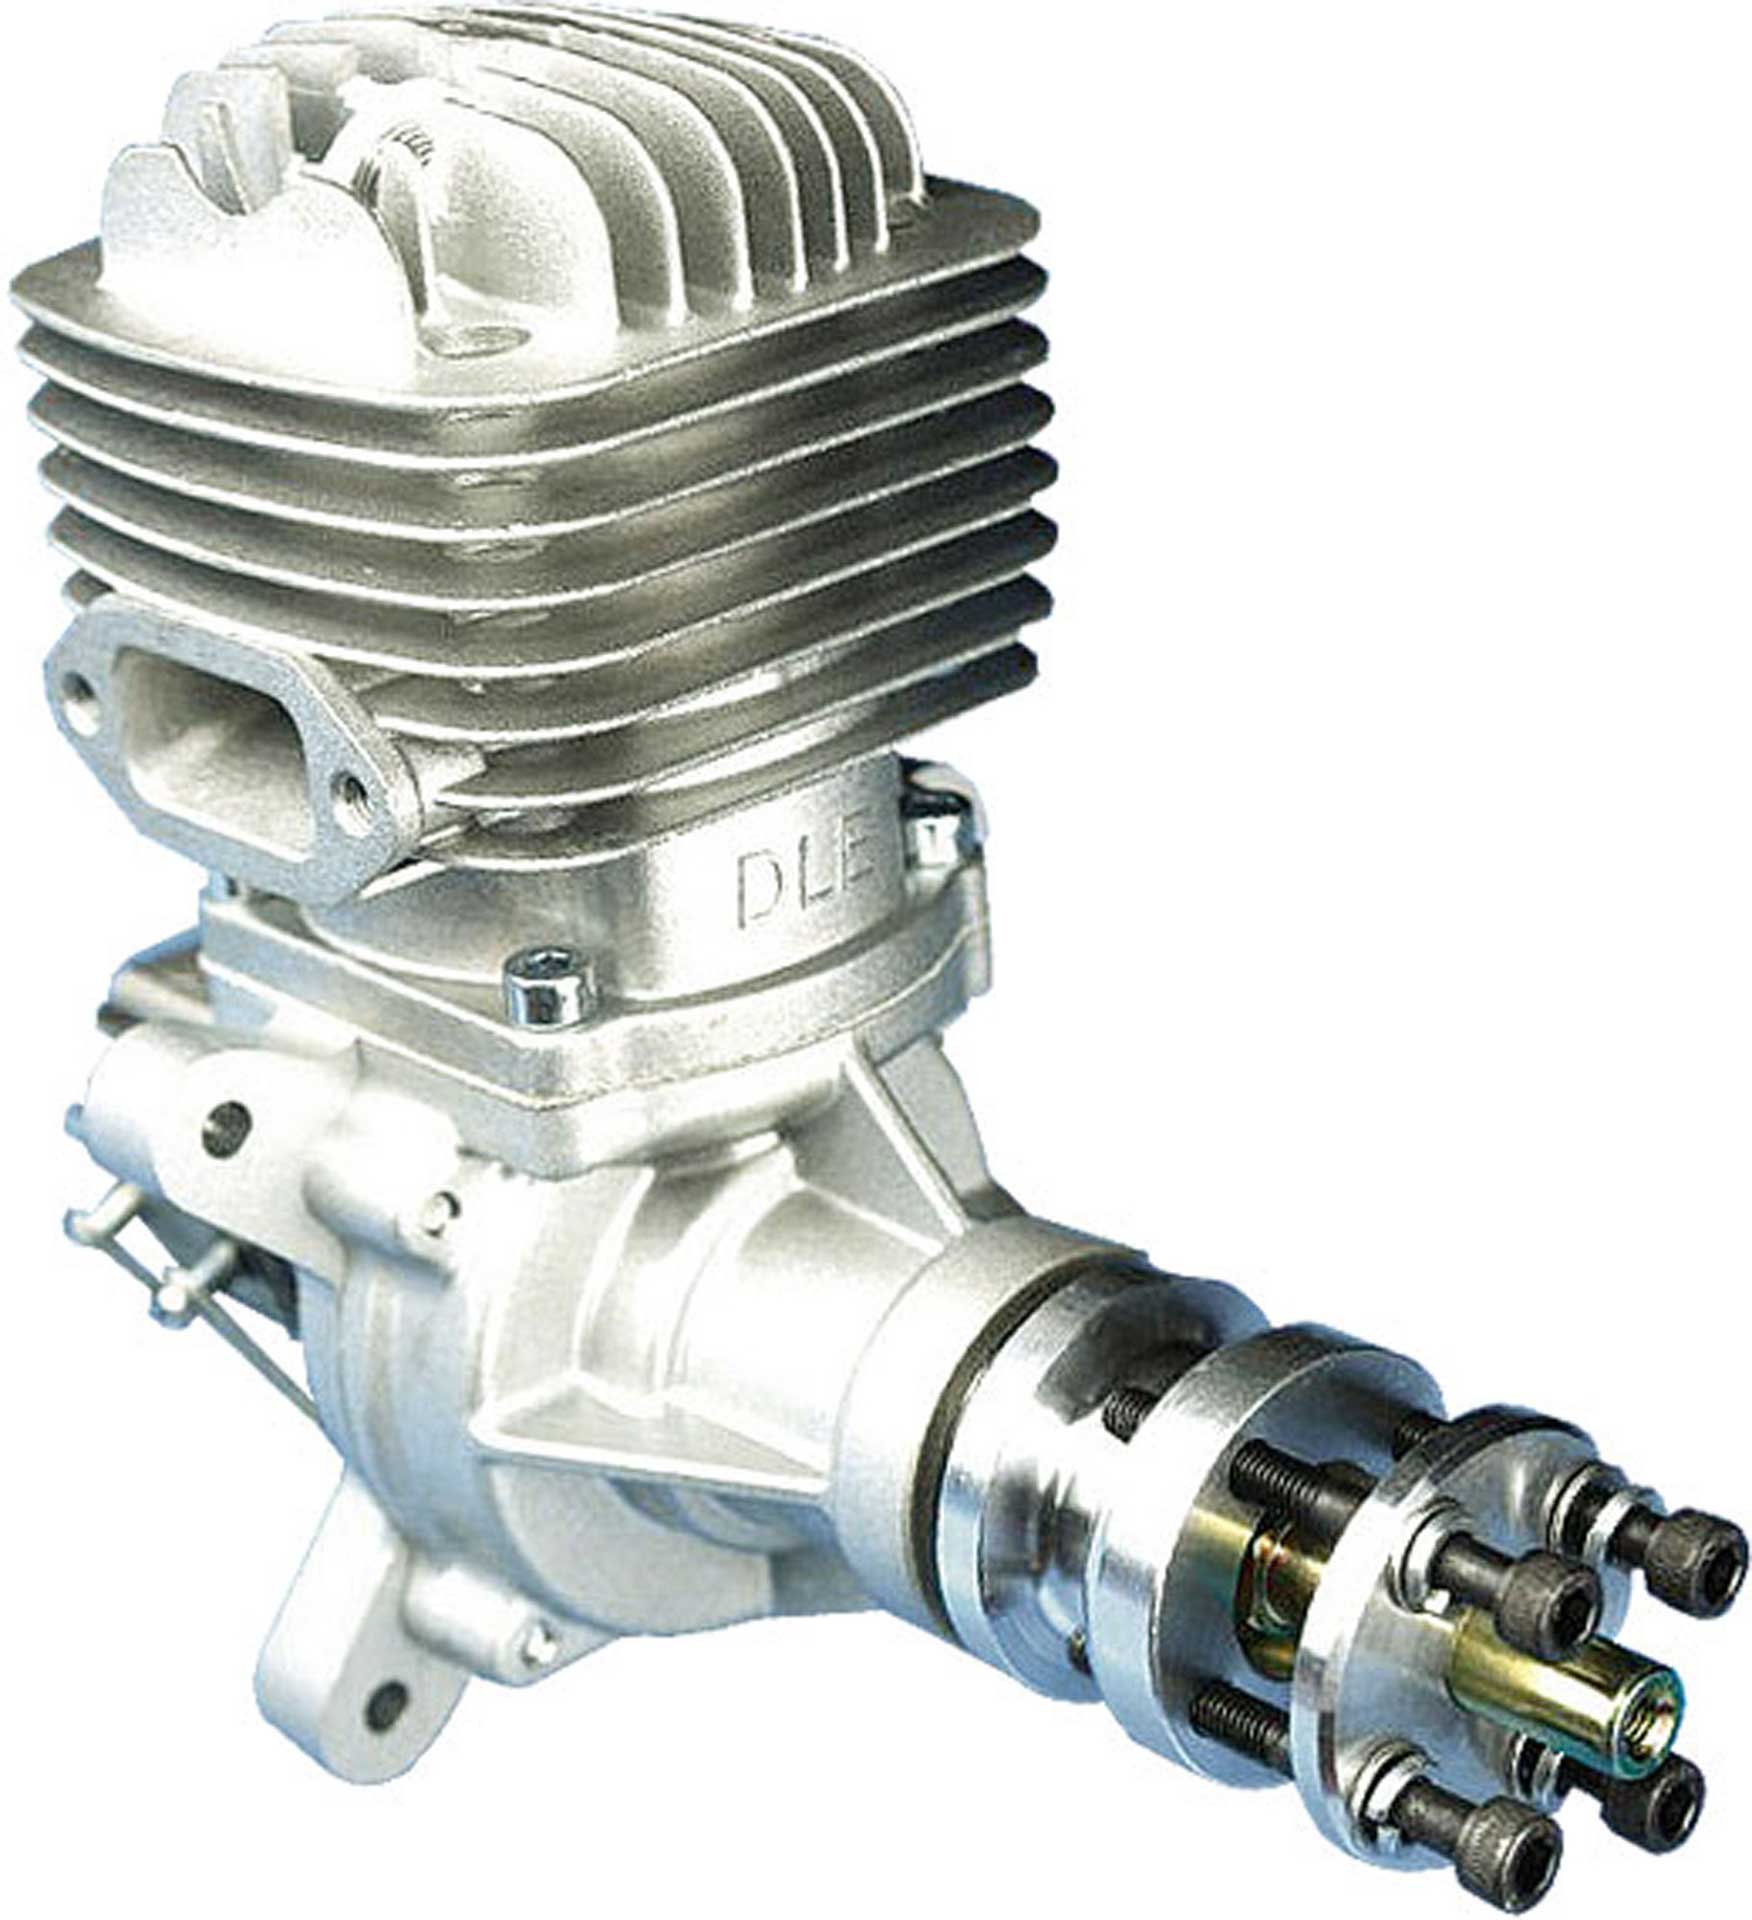 DLE Engines DLE 61 Benzin Motor "Original"